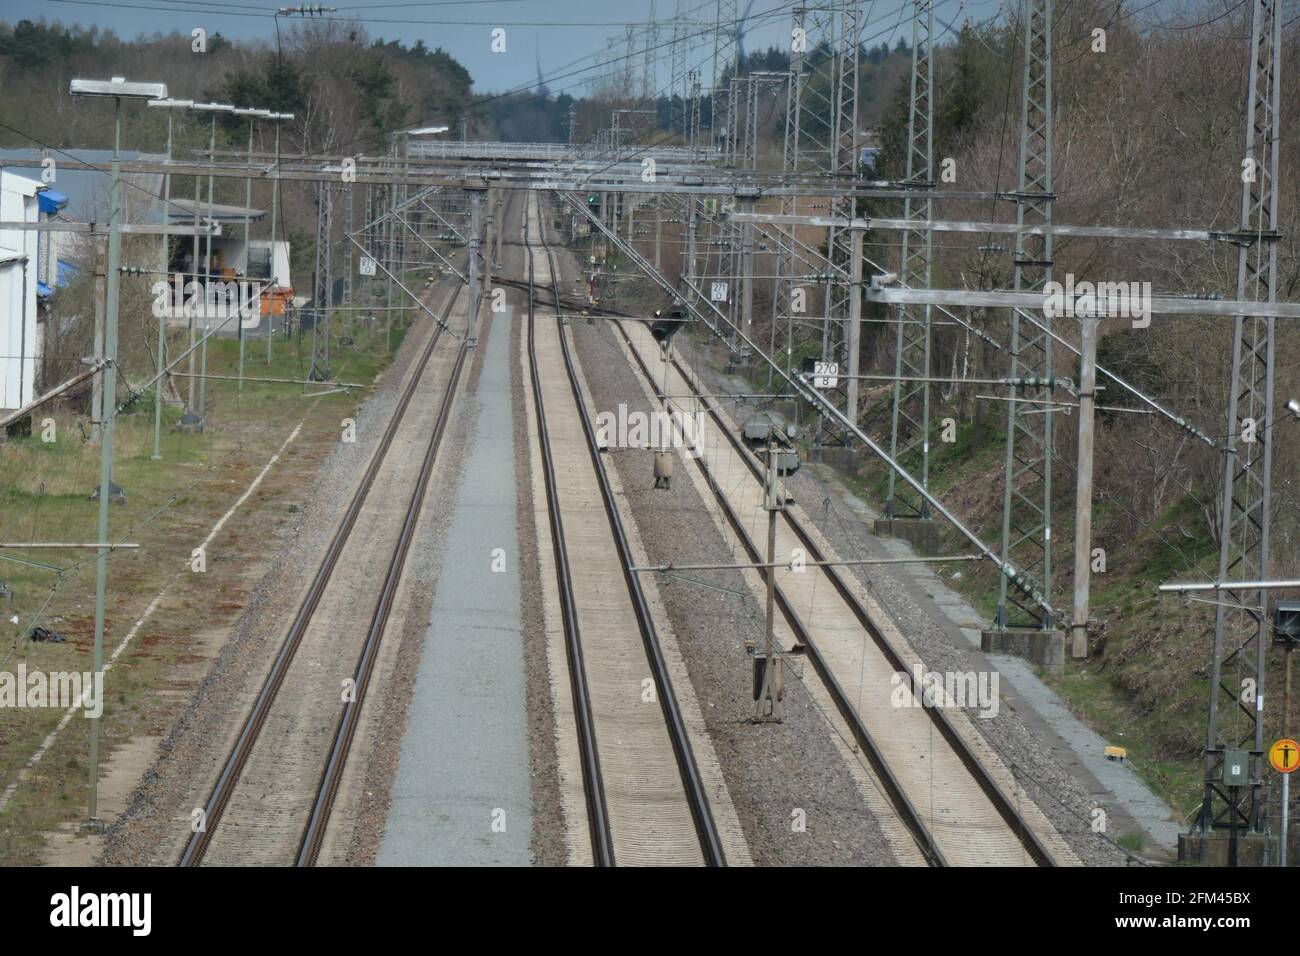 Schienen / Railway tracks Stock Photo